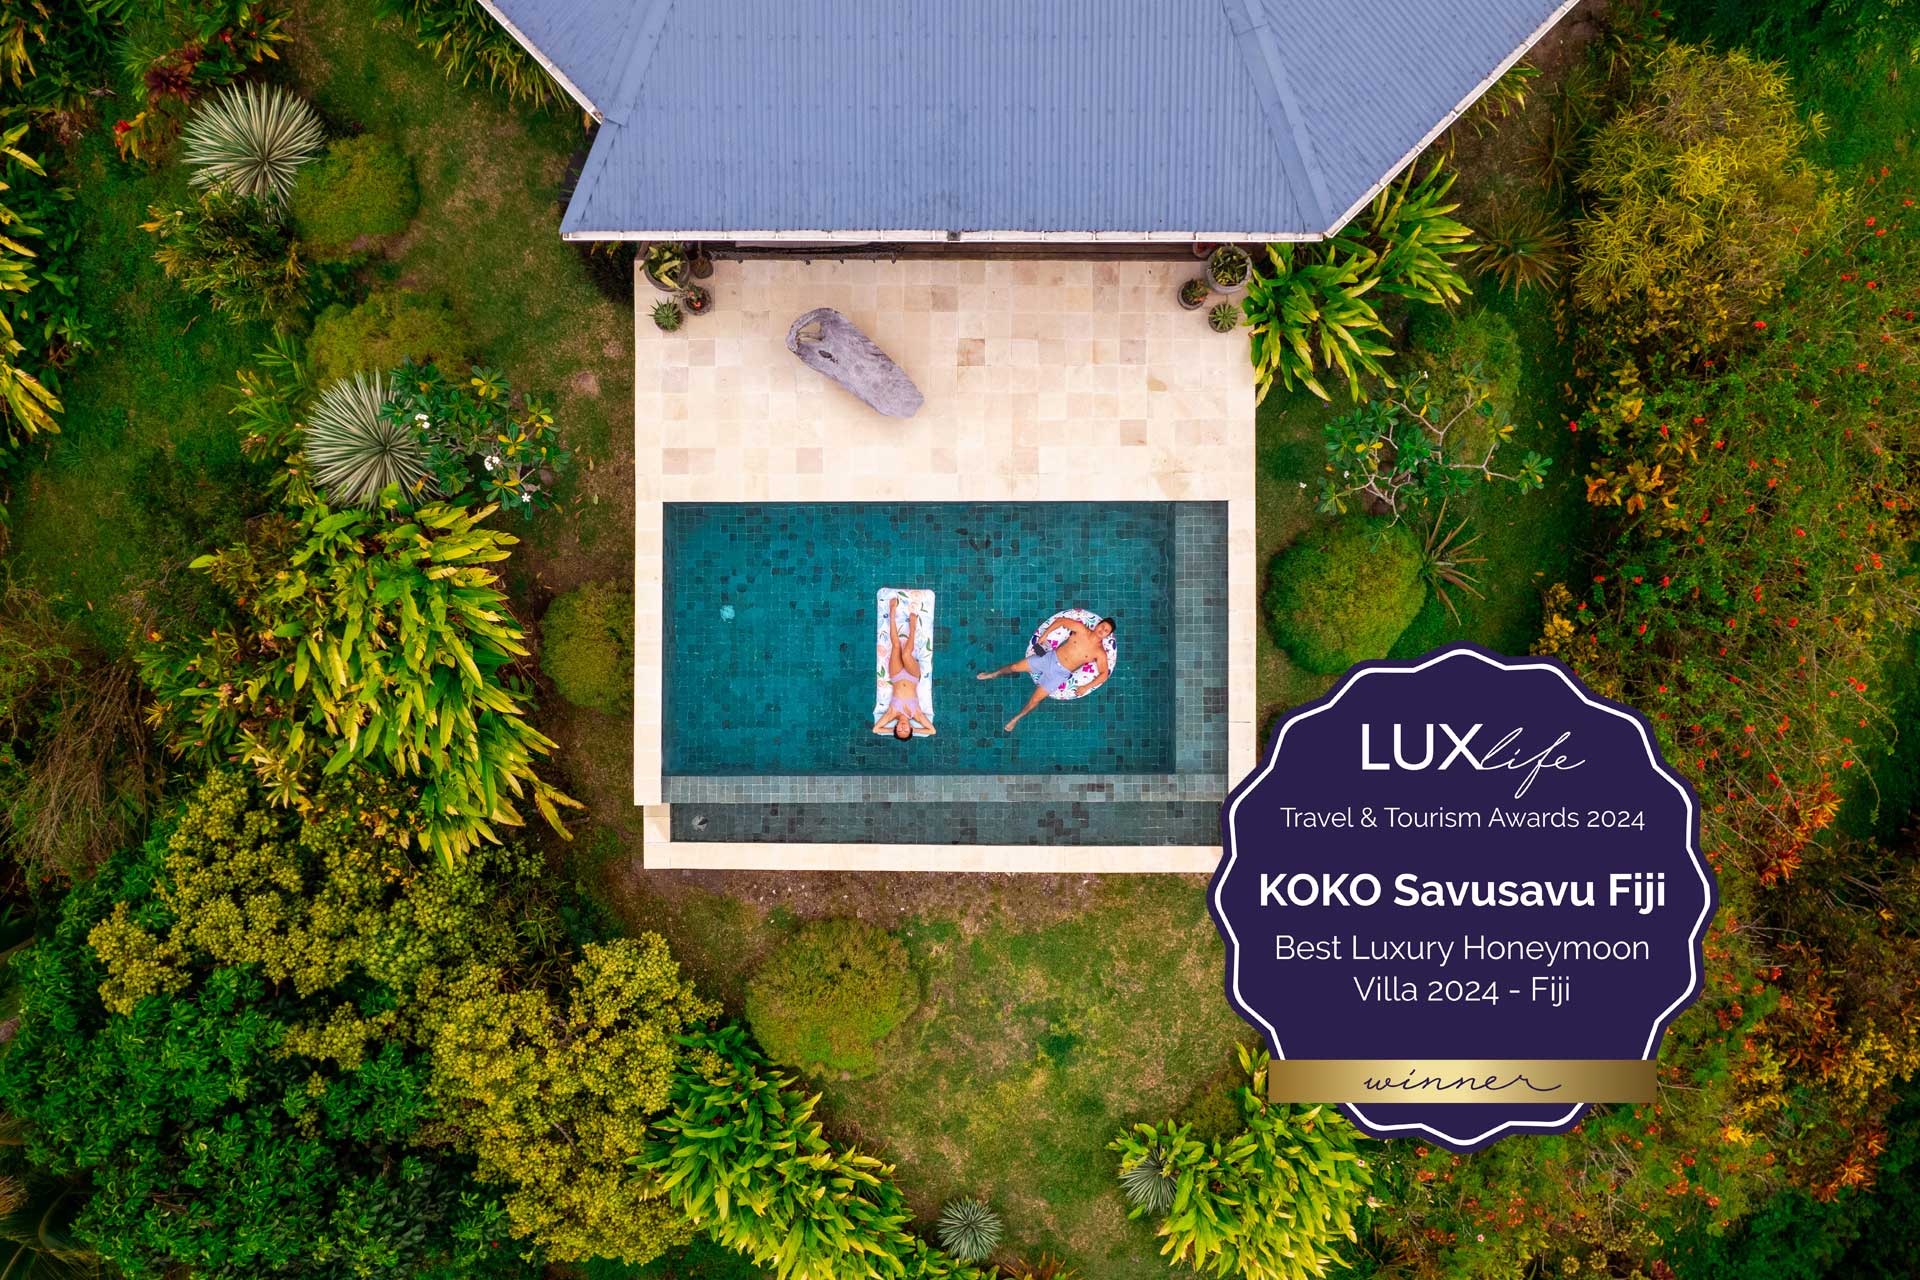 KOKO Savusavu Fiji Named 'Best Luxury Honeymoon Villa 2024 in Fiji' by LUXlife Magazine 